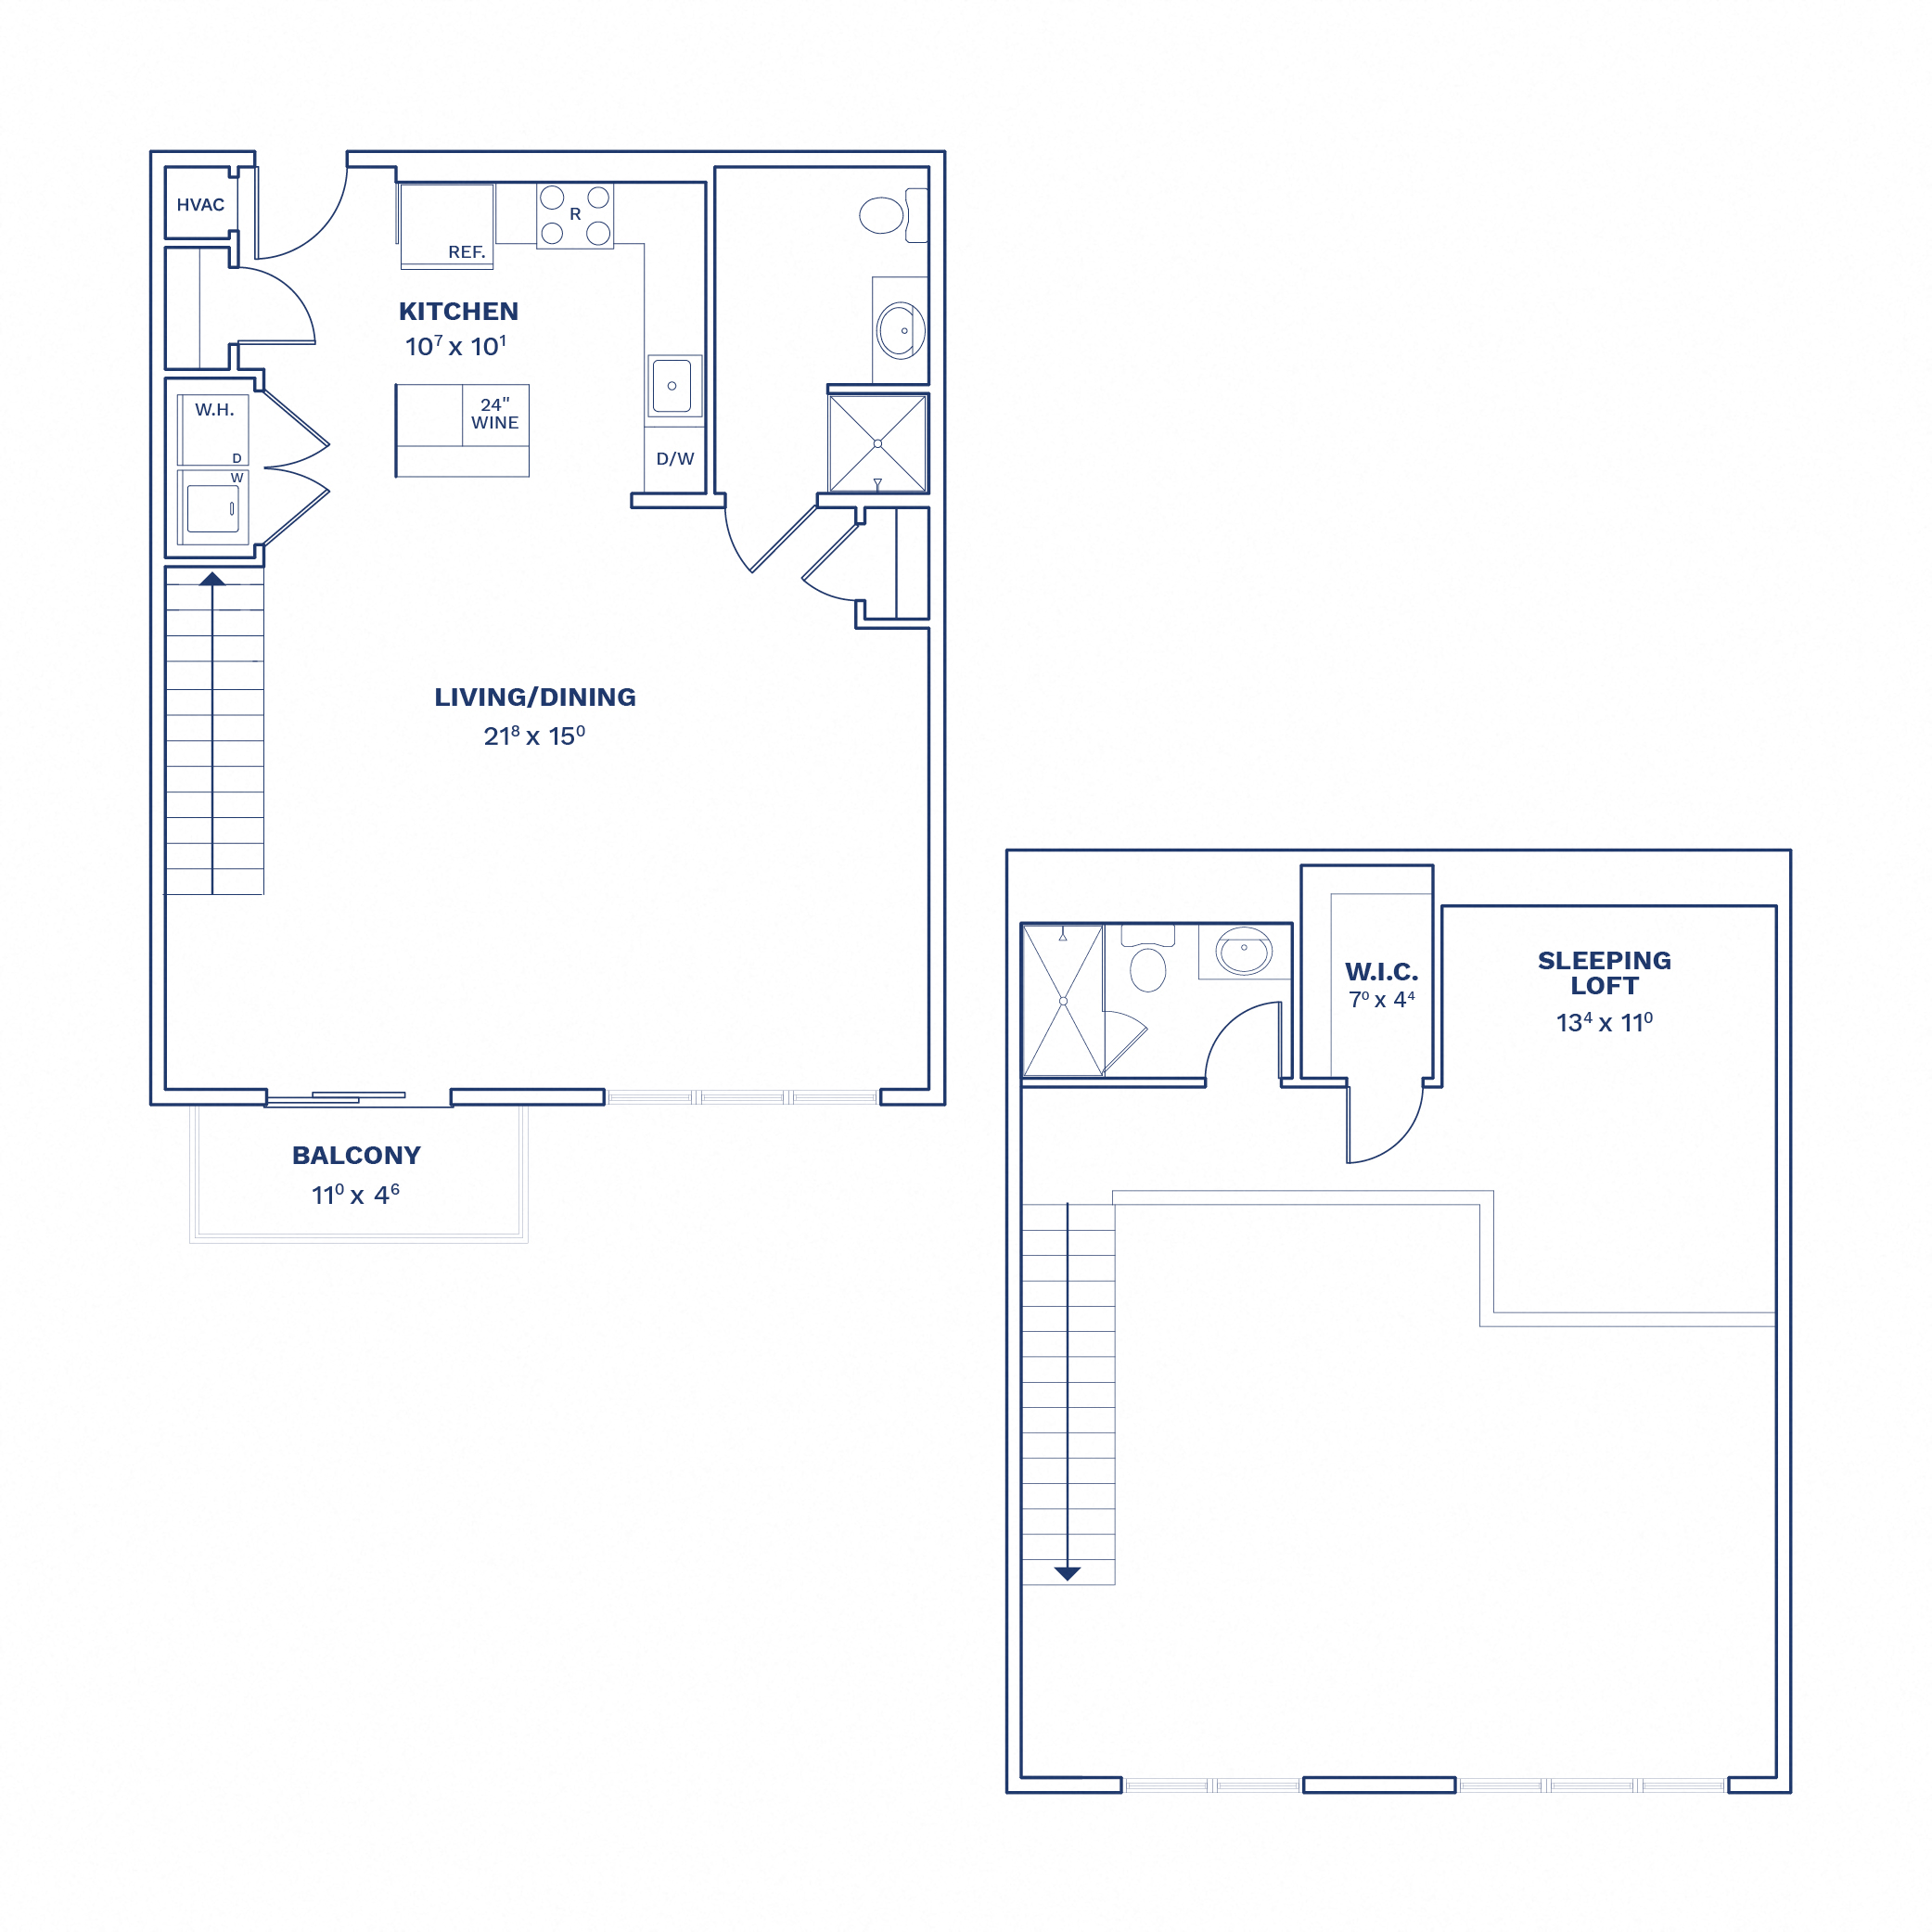 Floorplan of Unit 1 Bed/1 Bath Loft-A2L